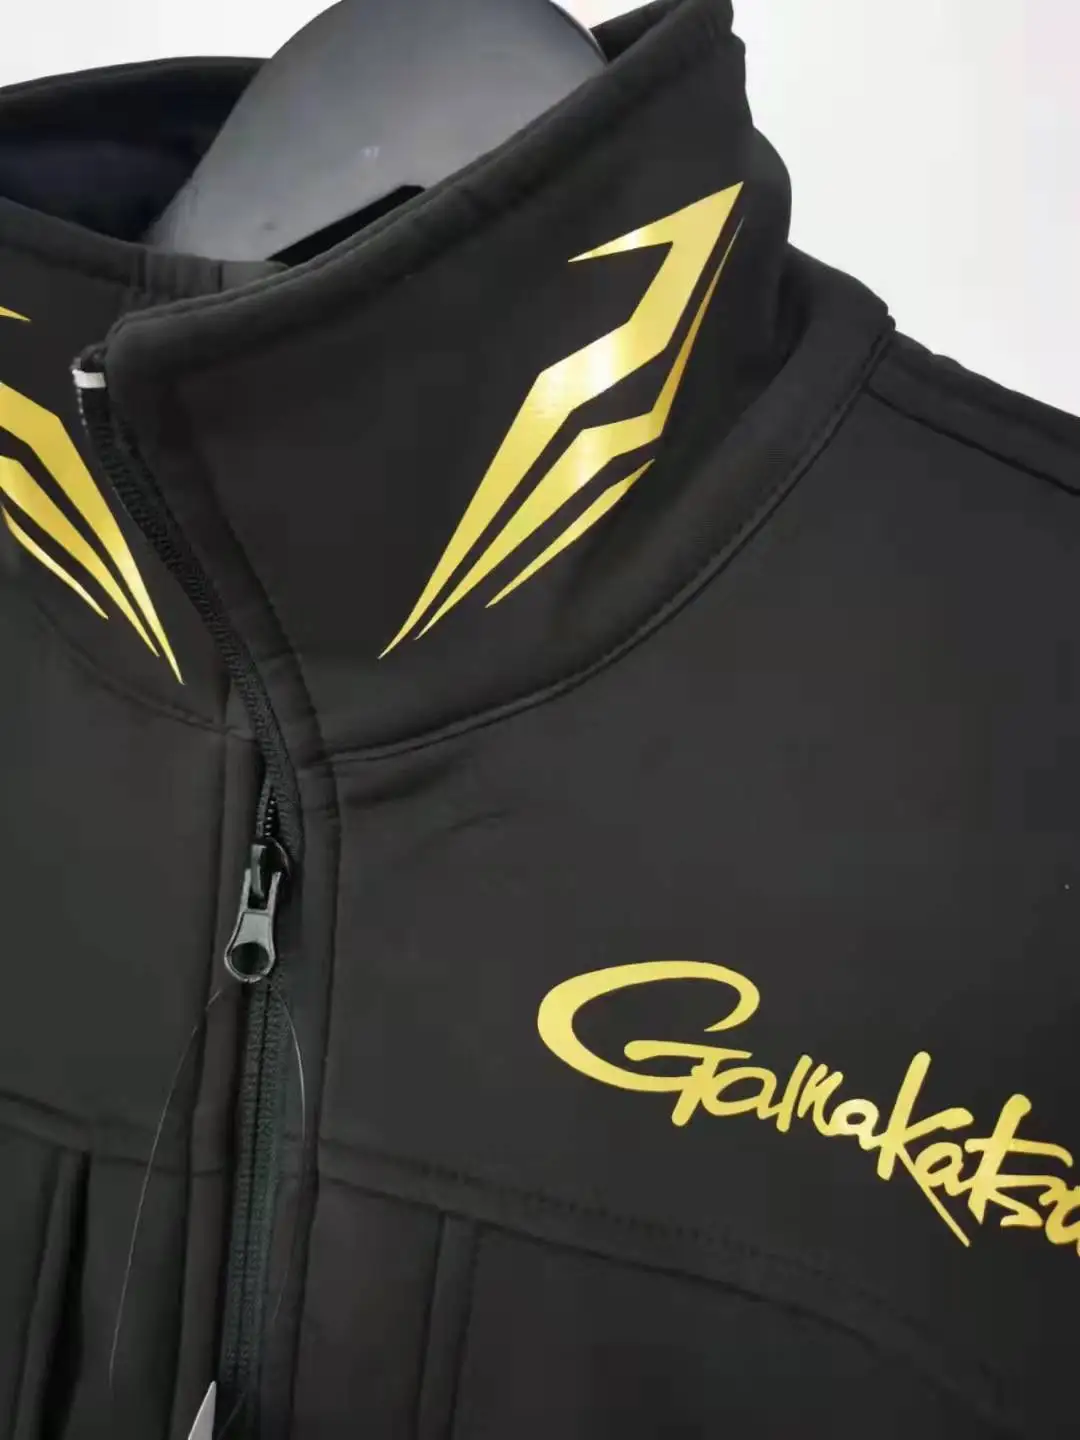 2022 New Gamakats Fishing Suit Winter Men's Outdoor Warmth Velvet Thick Jacket + Pants Belt Adjustable Fishing Soft Shell Jacket enlarge